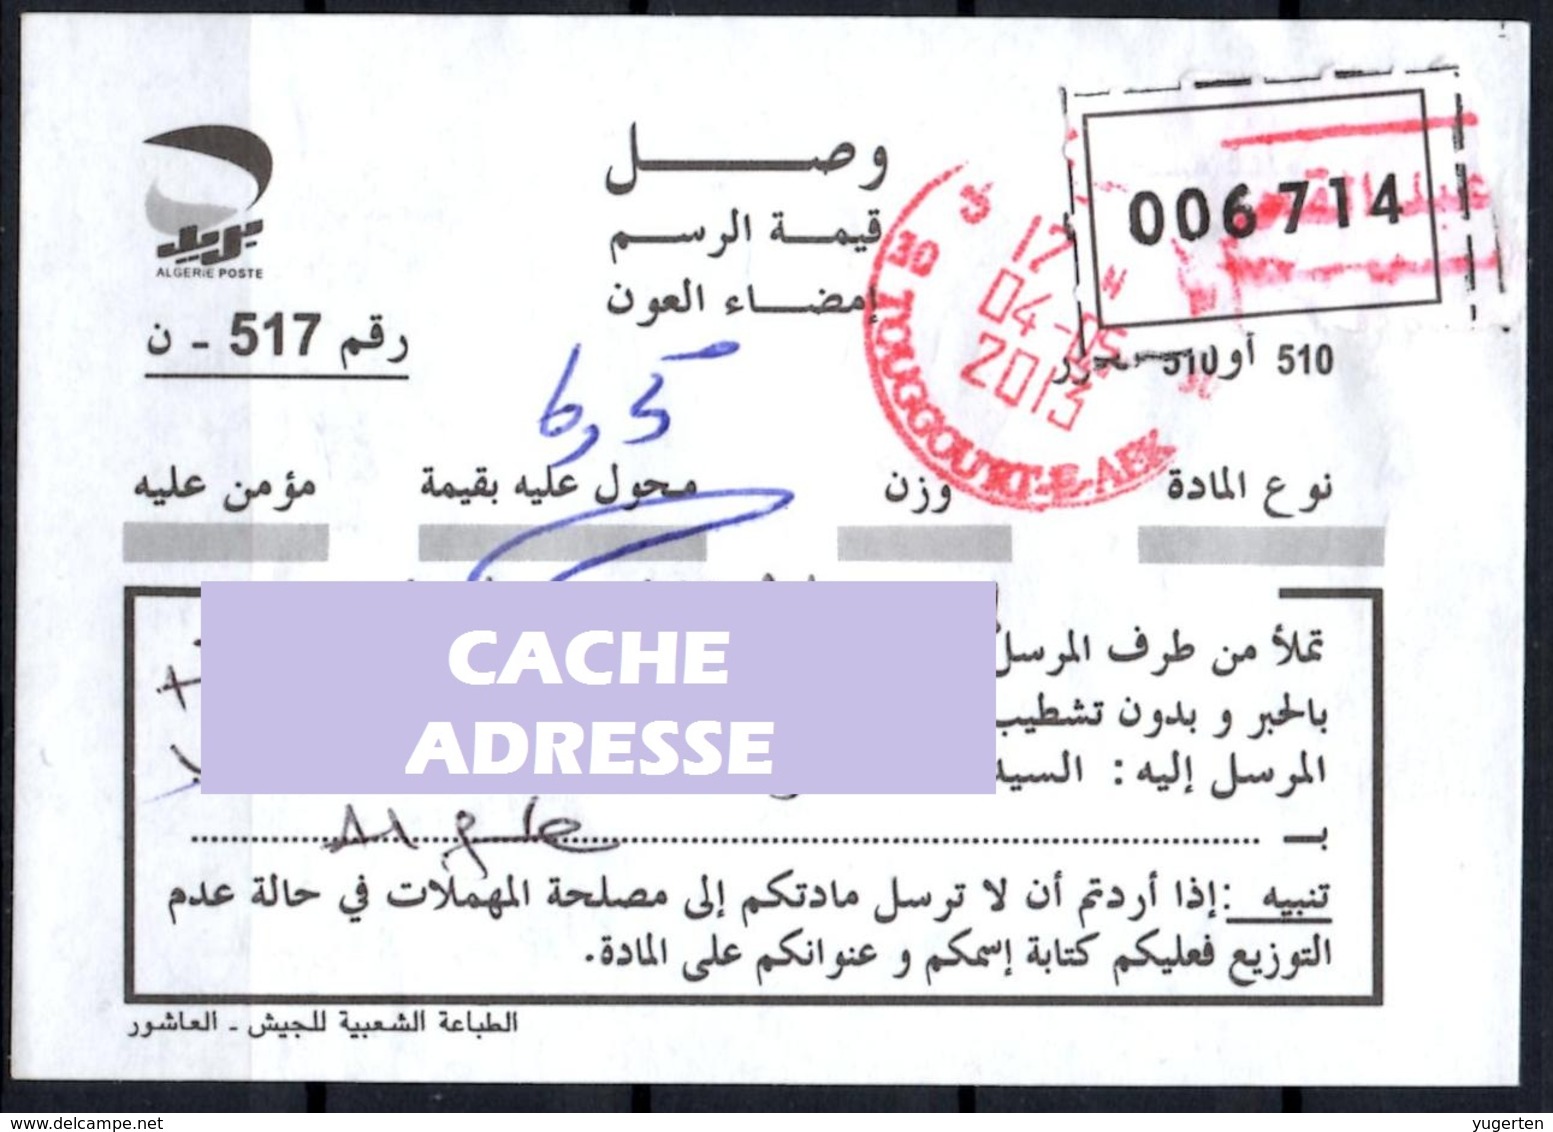 ALGERIJE Old Label On Receipt Of Registered Cover Domestic Rate 2013 Ancienne Etiquette Recommandation Tarif Intérieur - Poste